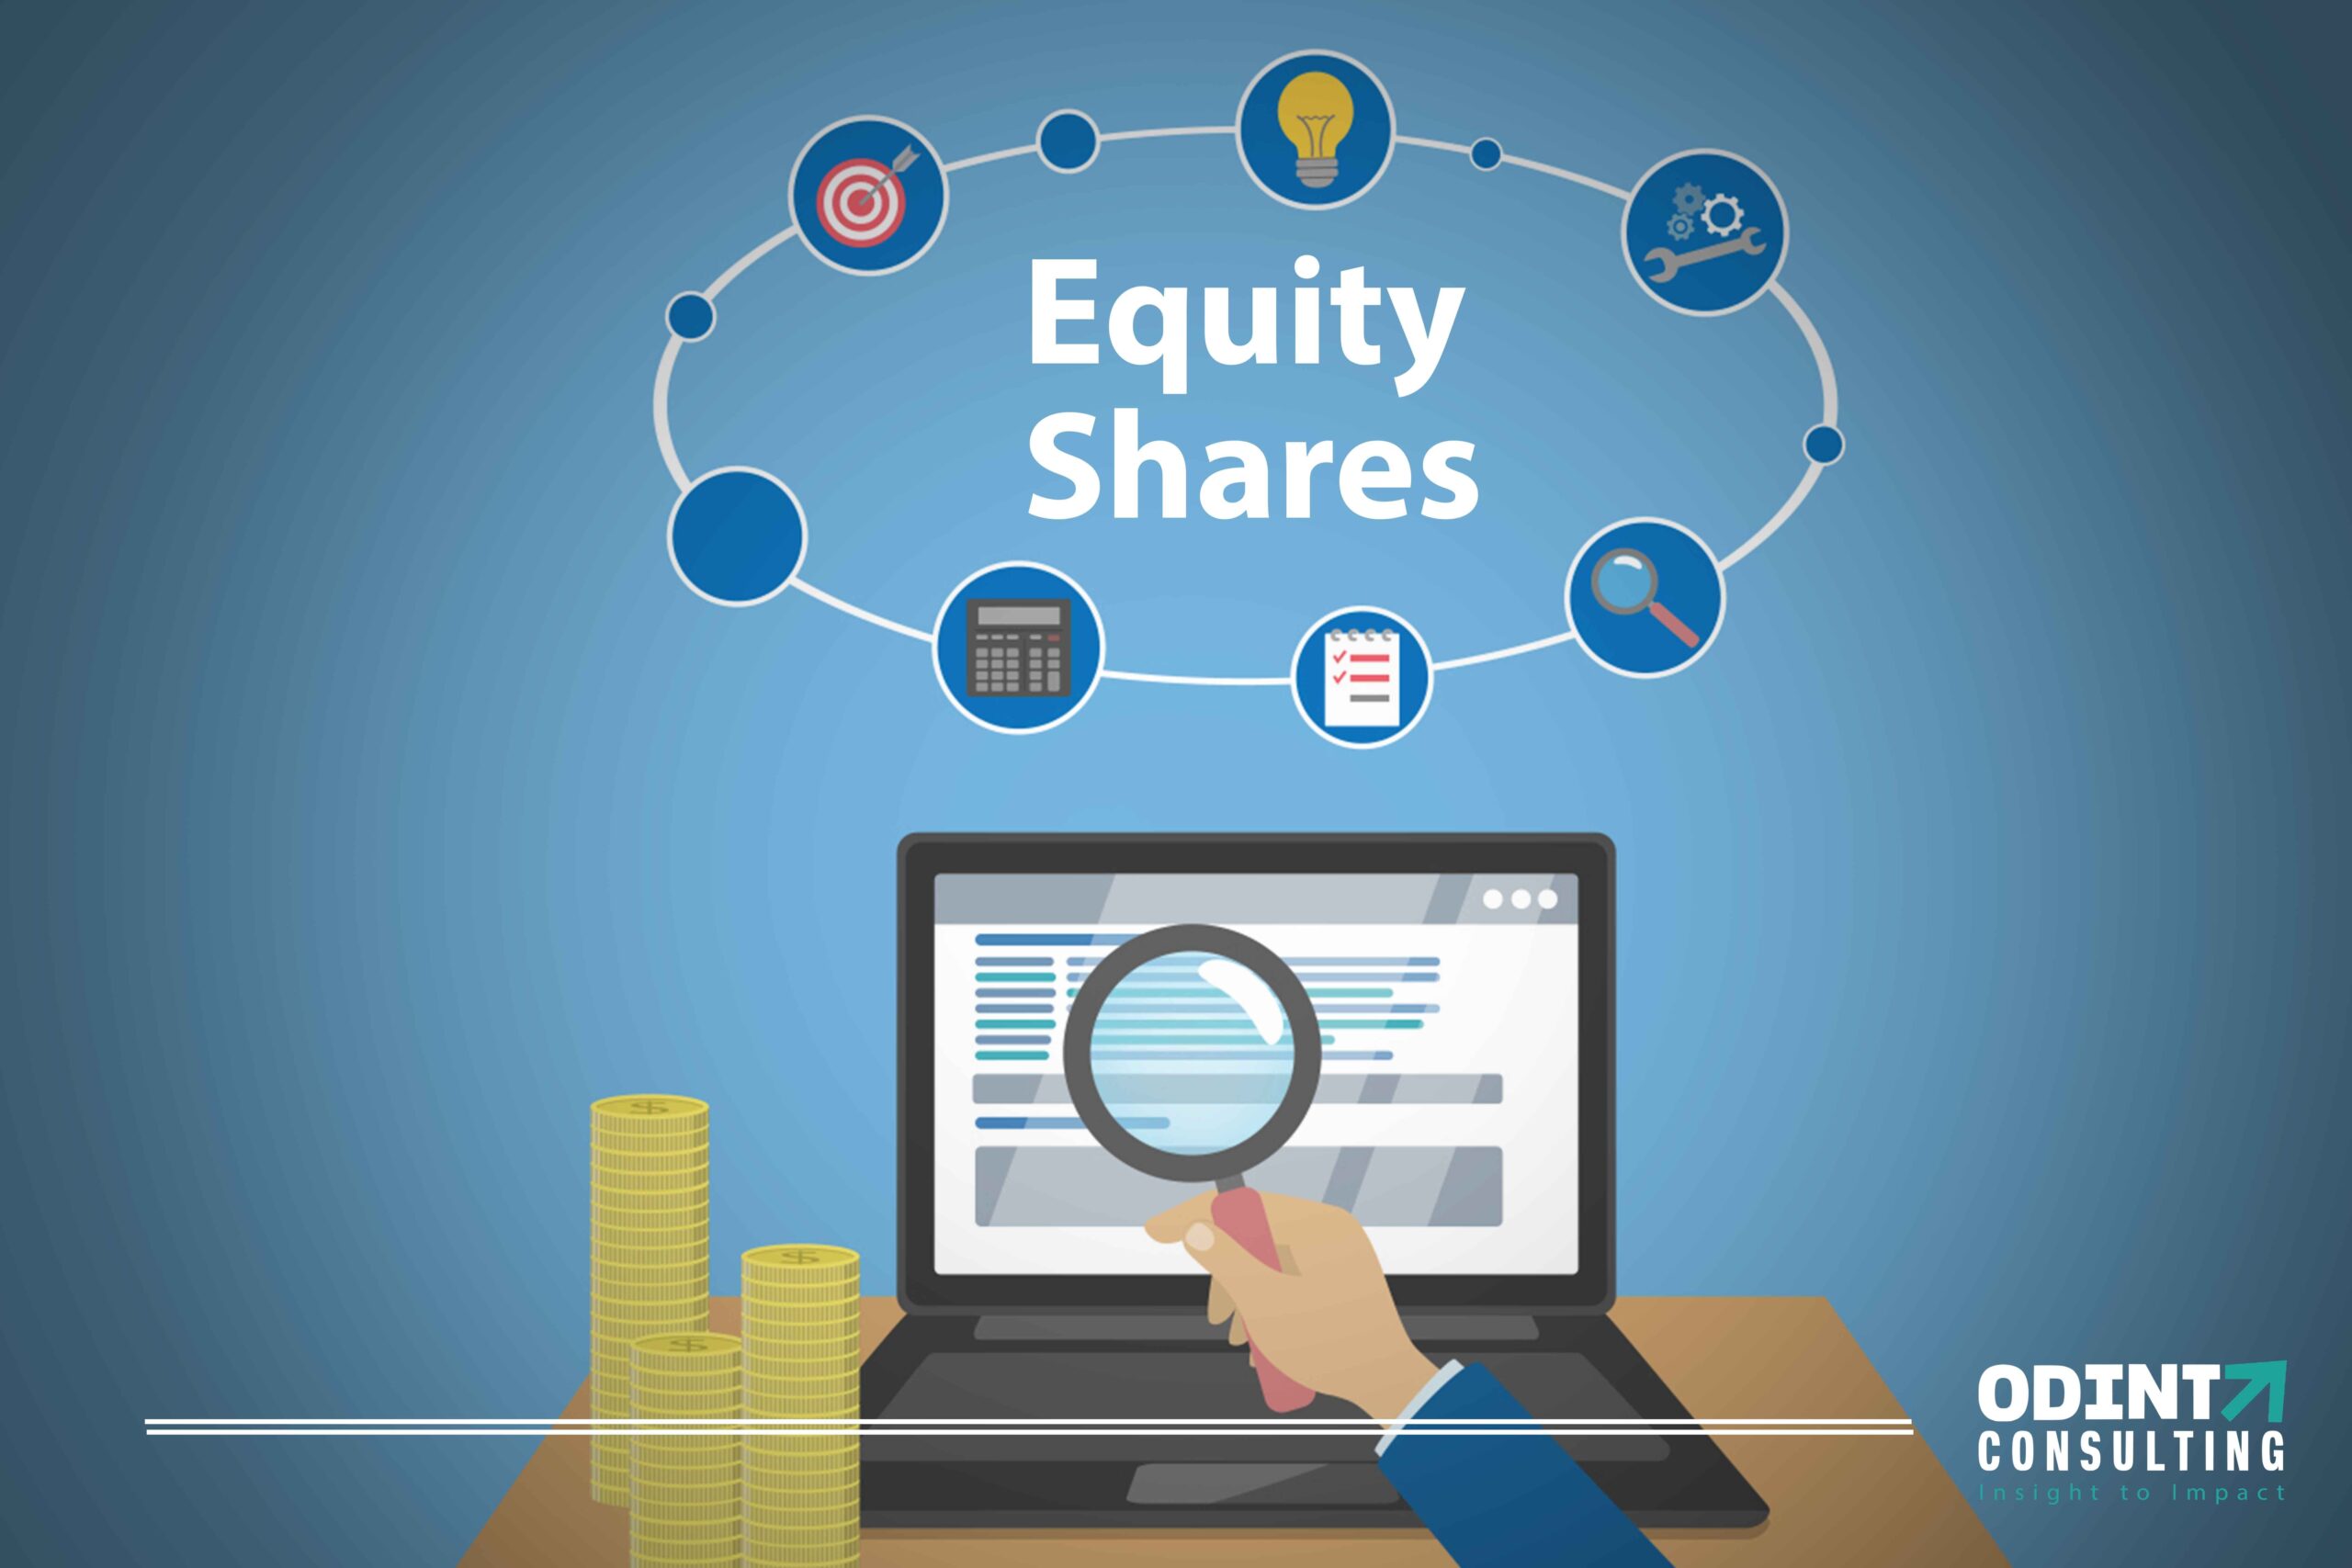 Equity Shares: Types, Risks & Advantages Explained